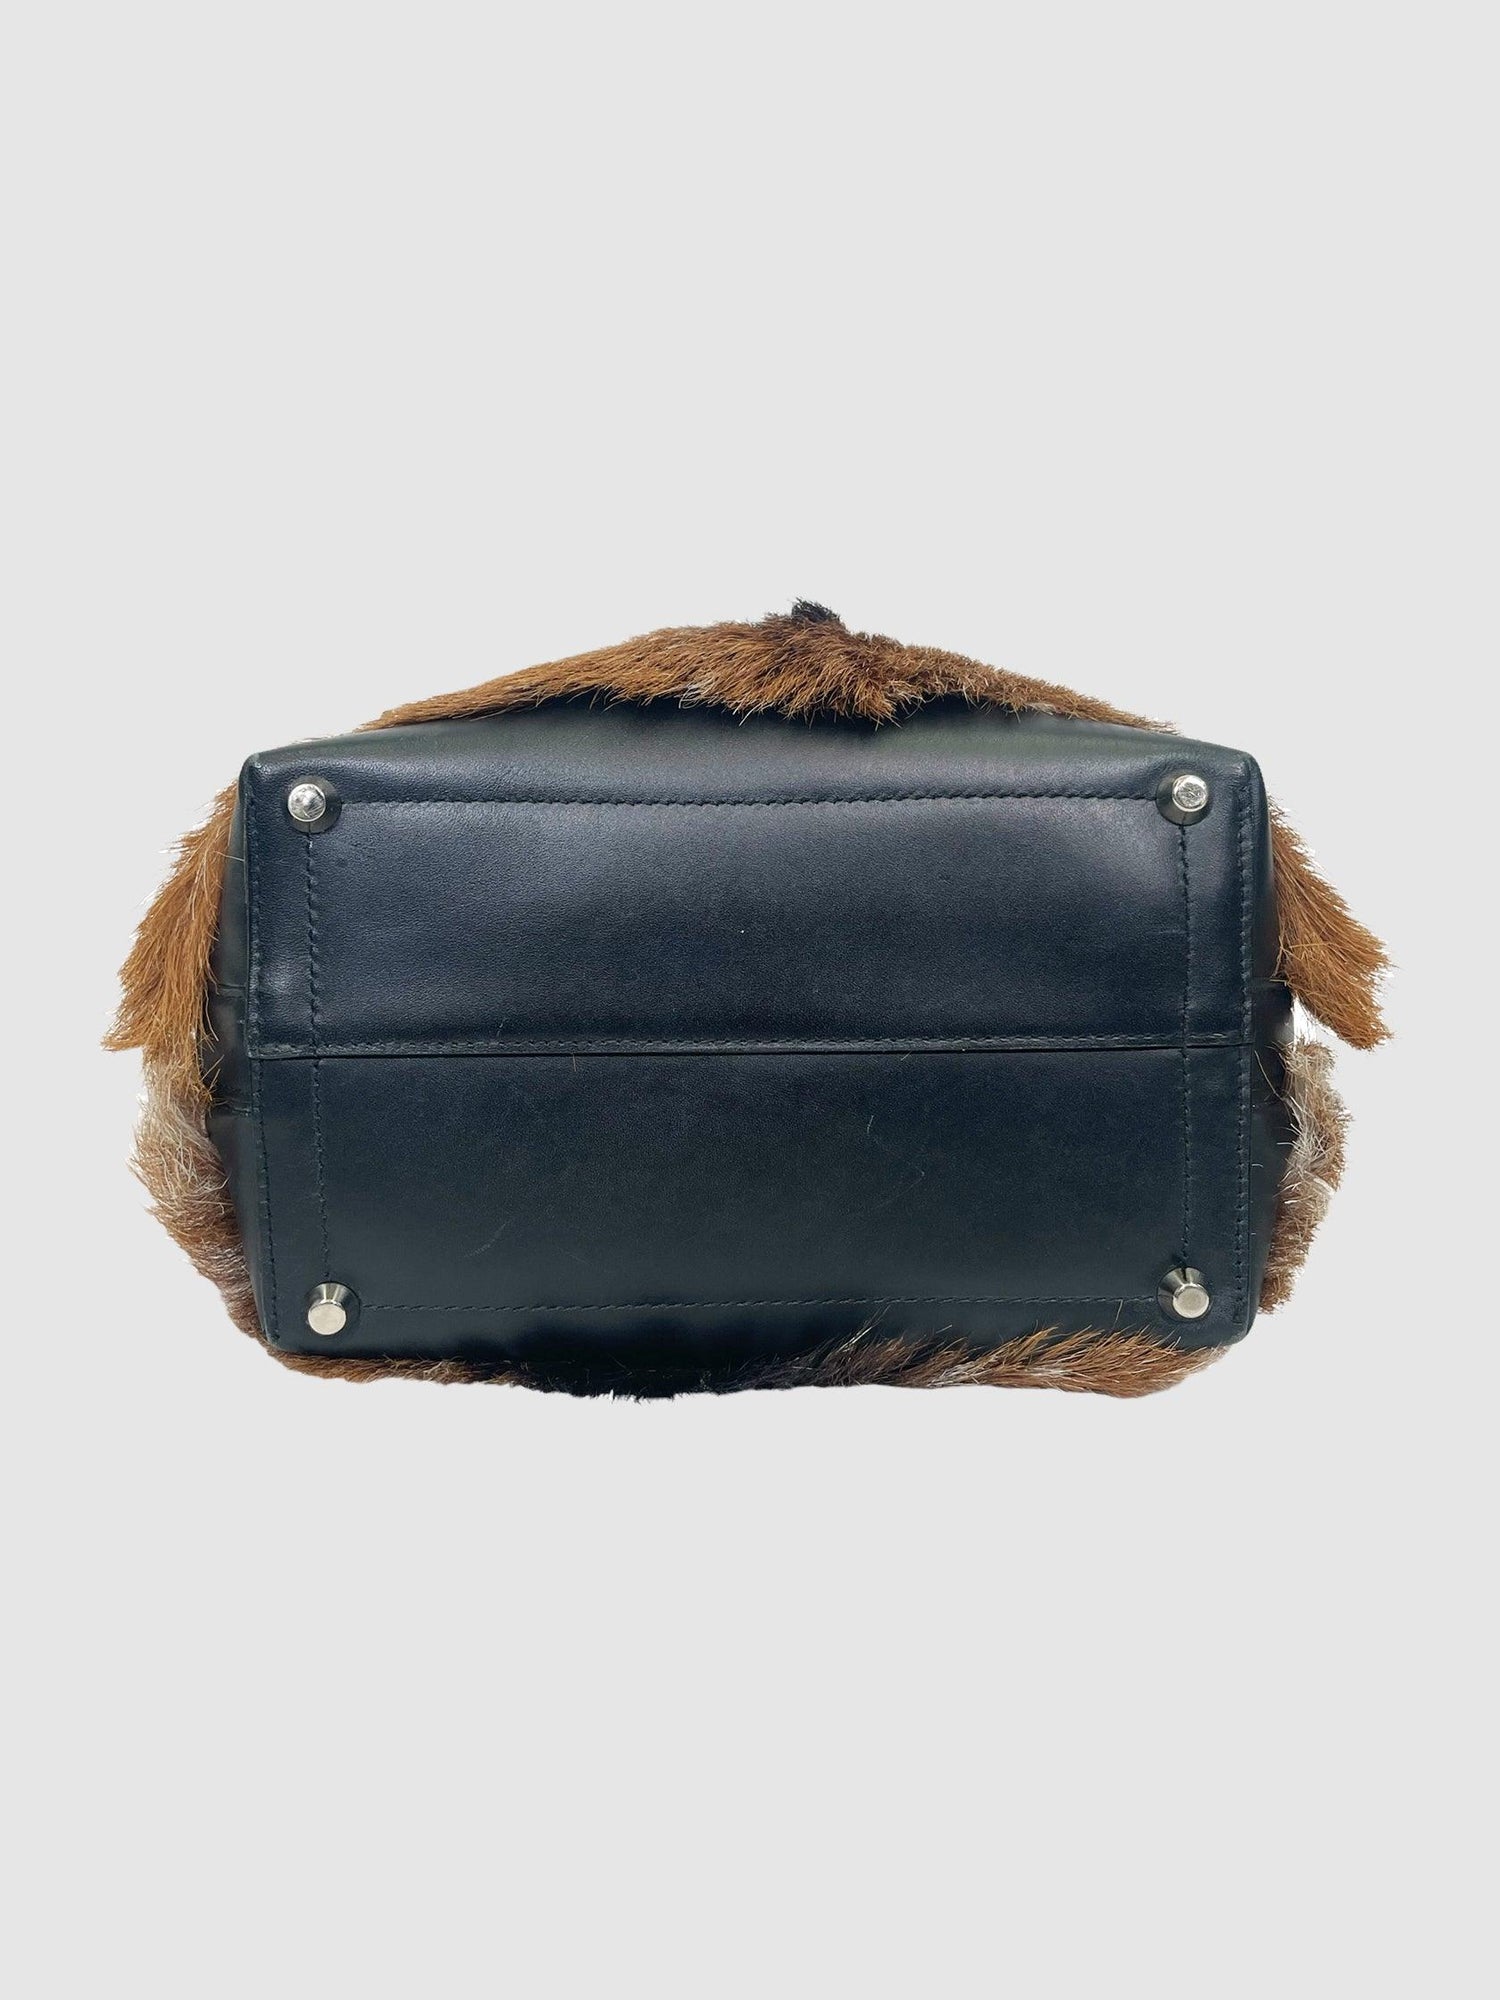 Proenza Schouler Fur Shoulder Bag - Second Nature Boutique